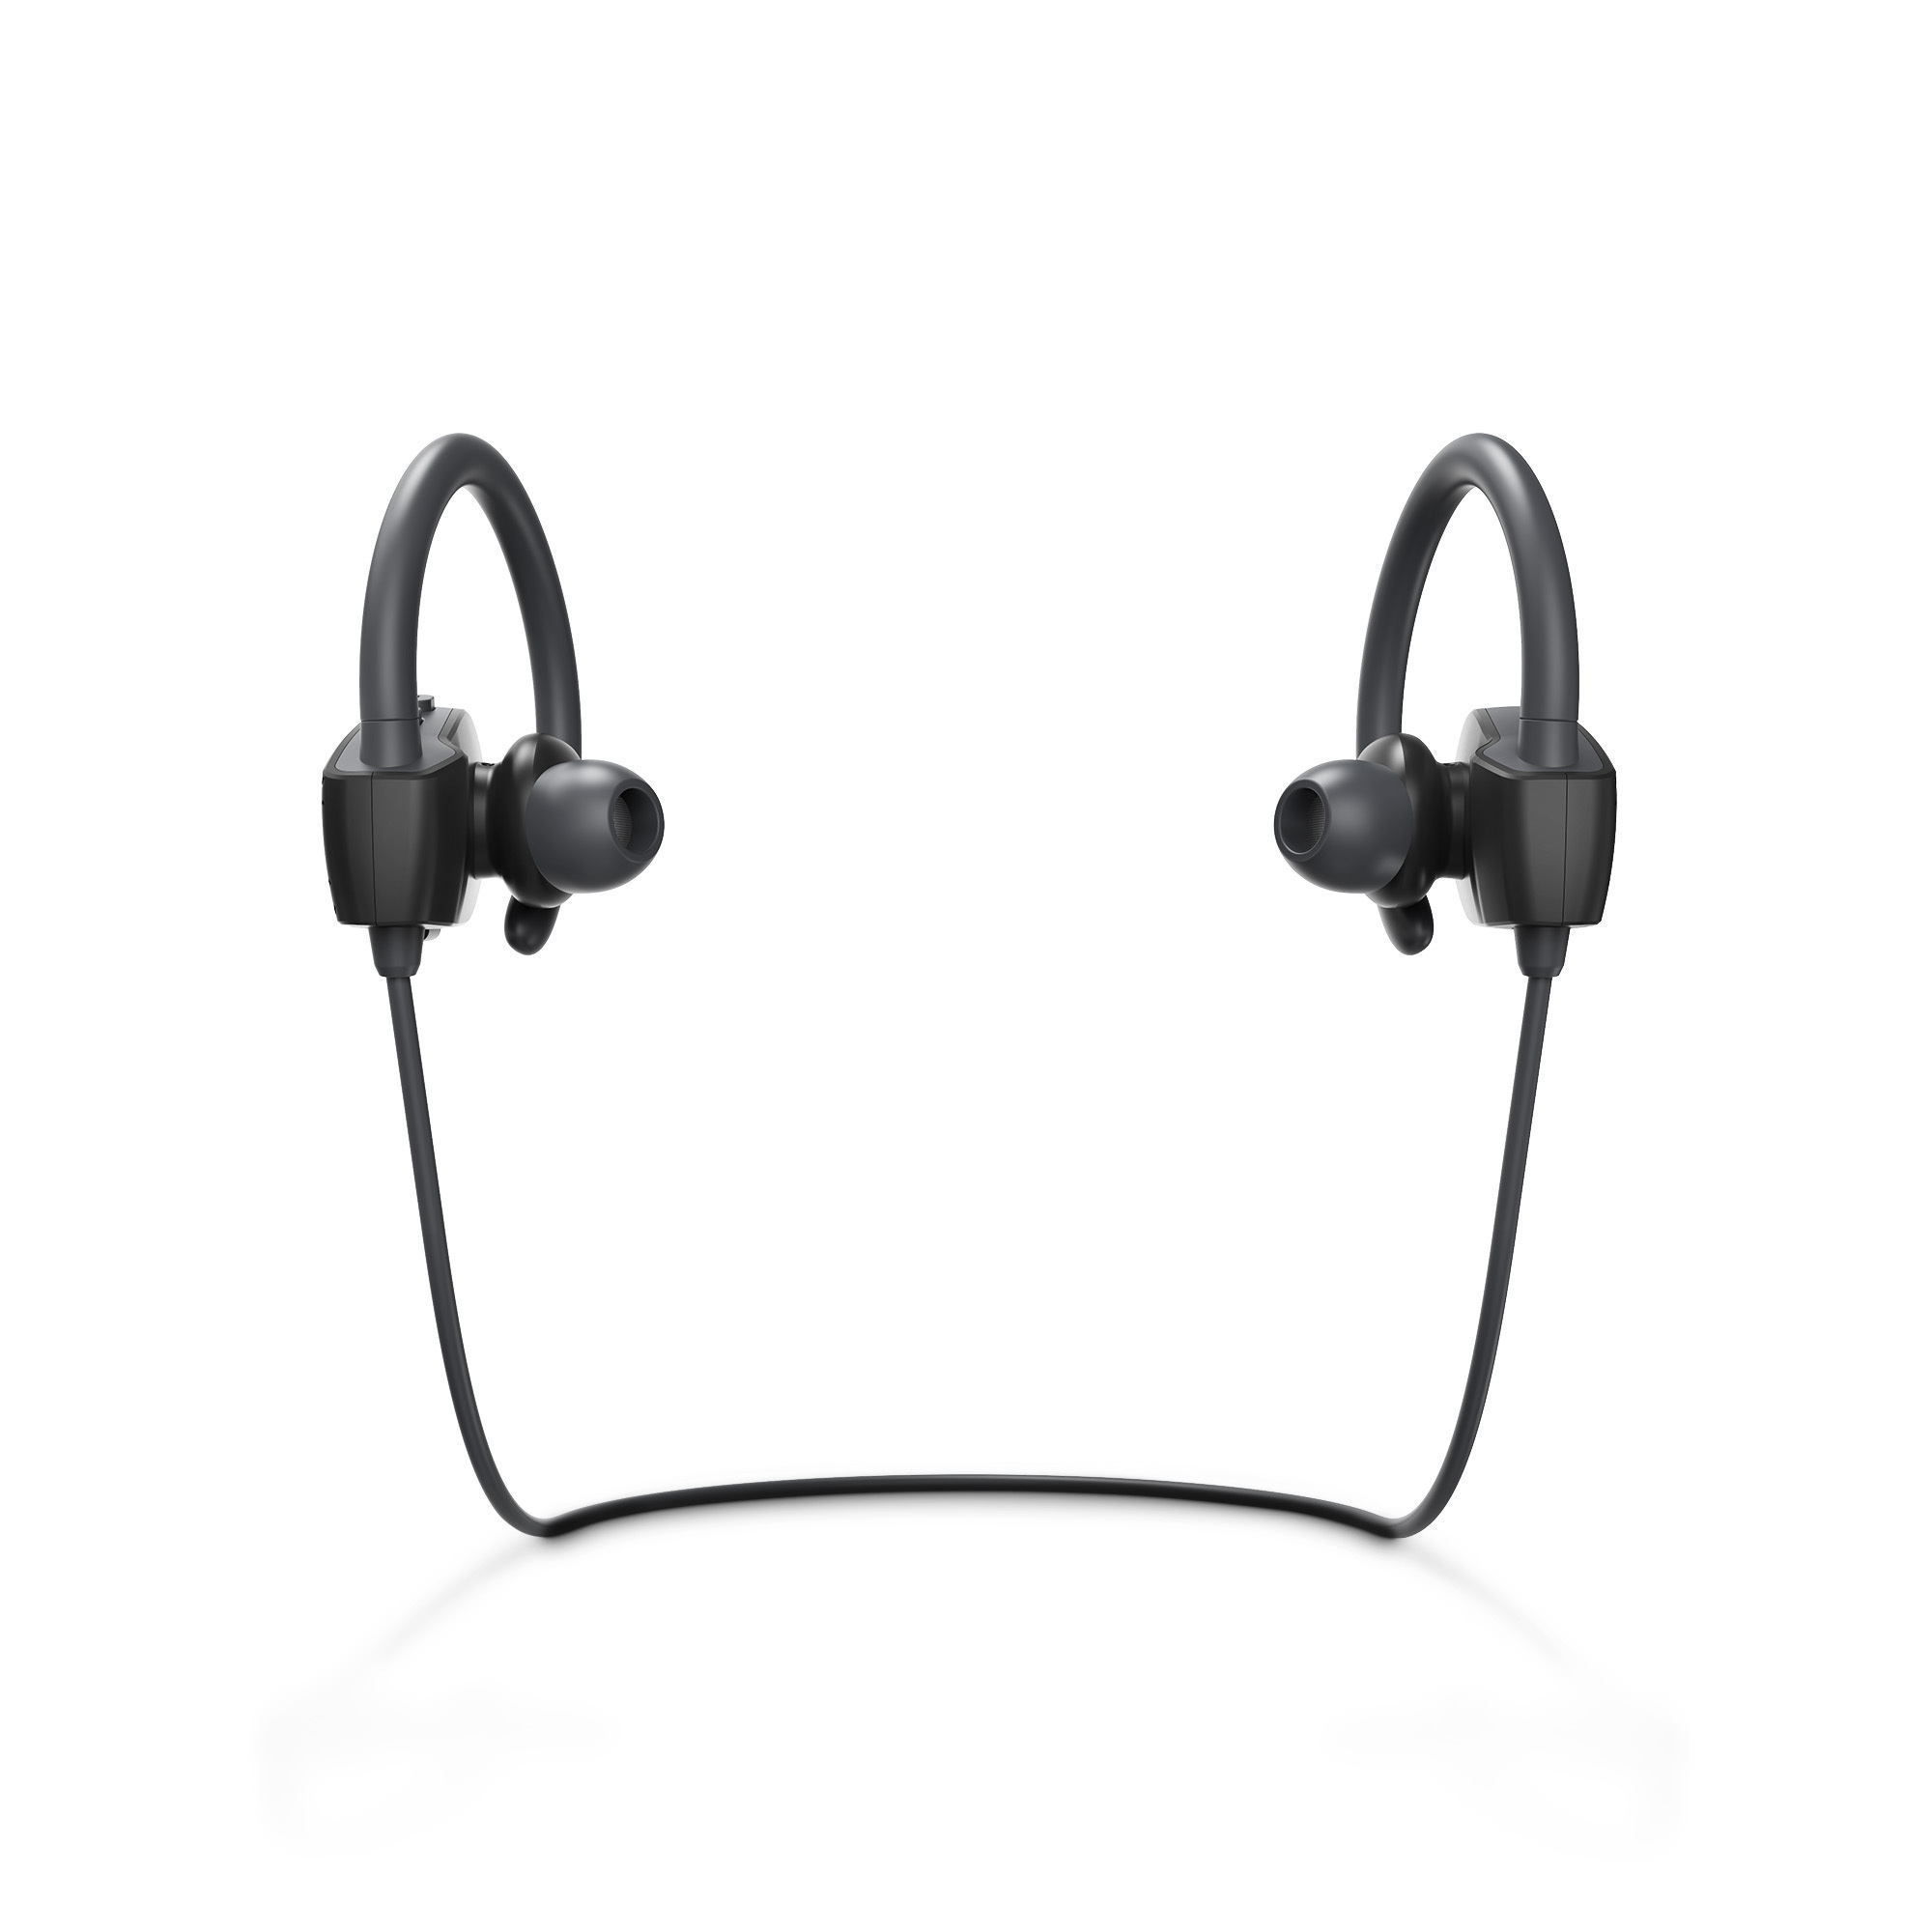 Deporte al ritmo de la música: nueve auriculares Bluetooth